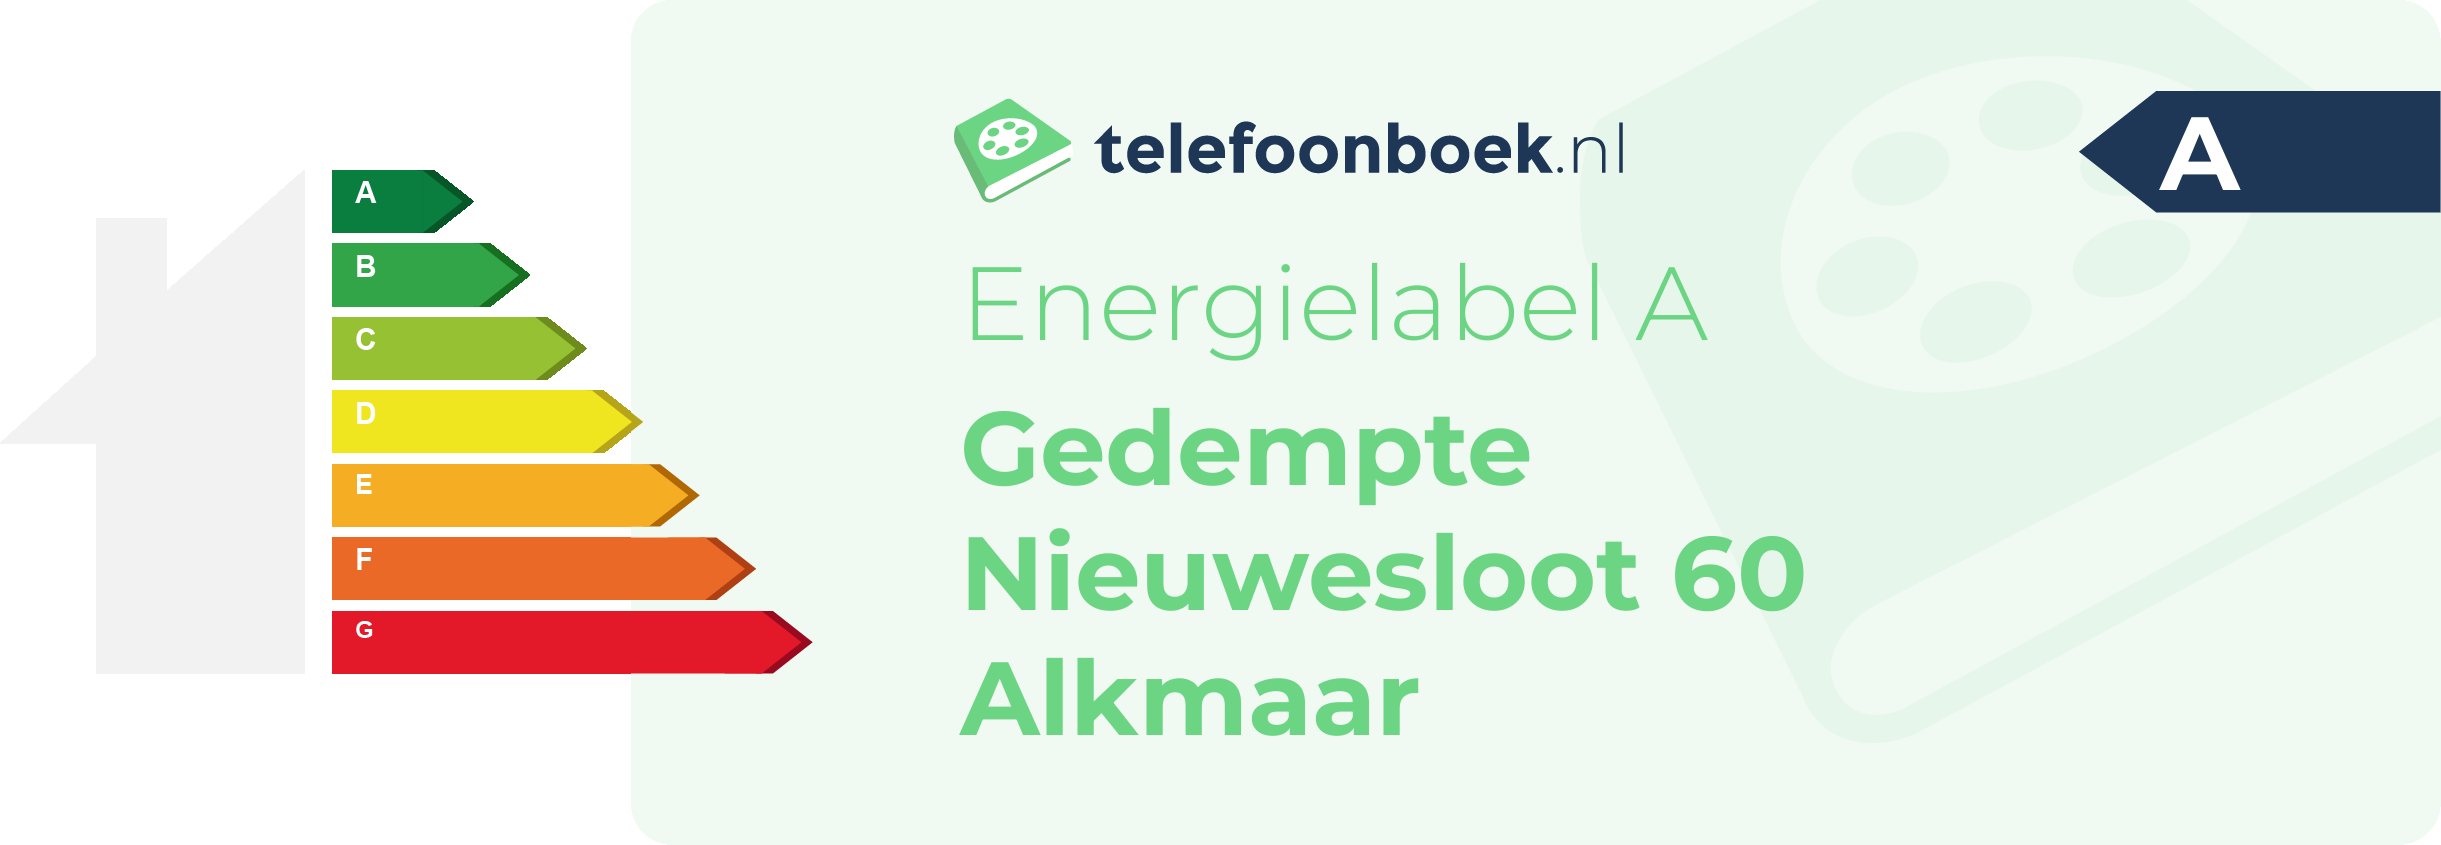 Energielabel Gedempte Nieuwesloot 60 Alkmaar